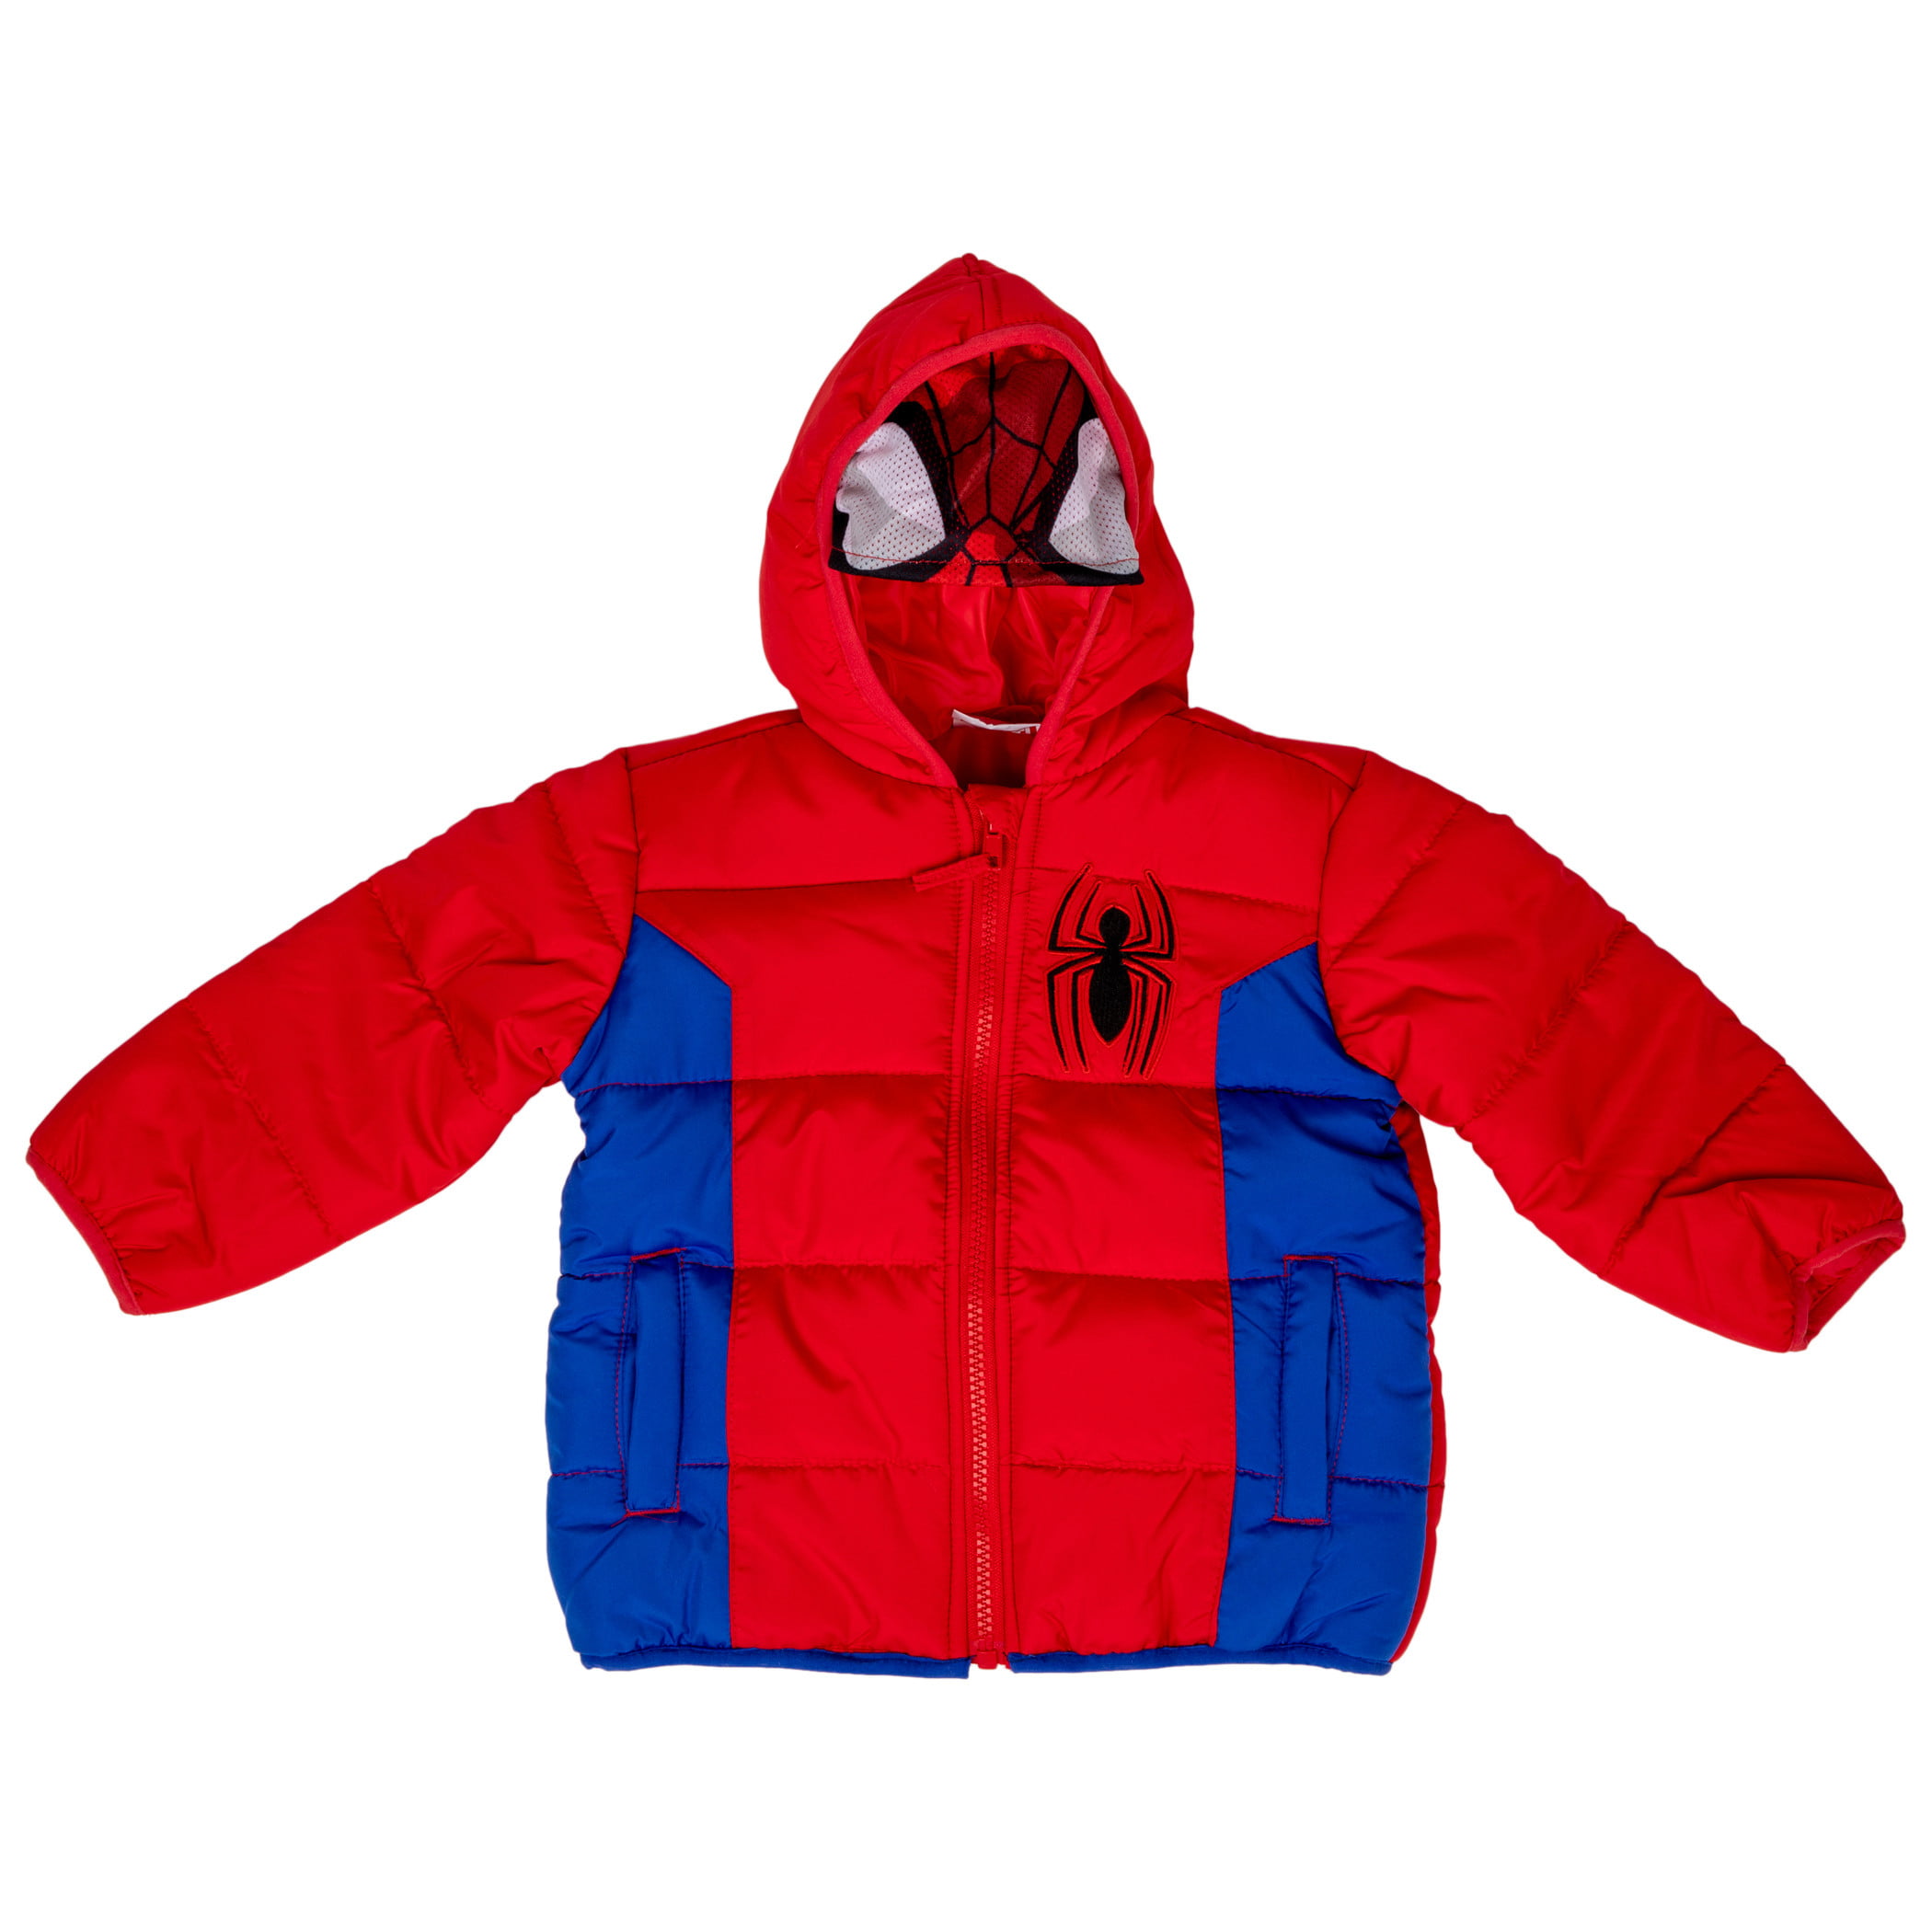 Marvel Comics Ultimate Spider-Man Boy's Toddler Winter Jacket W/Hood 2T-5T NEW